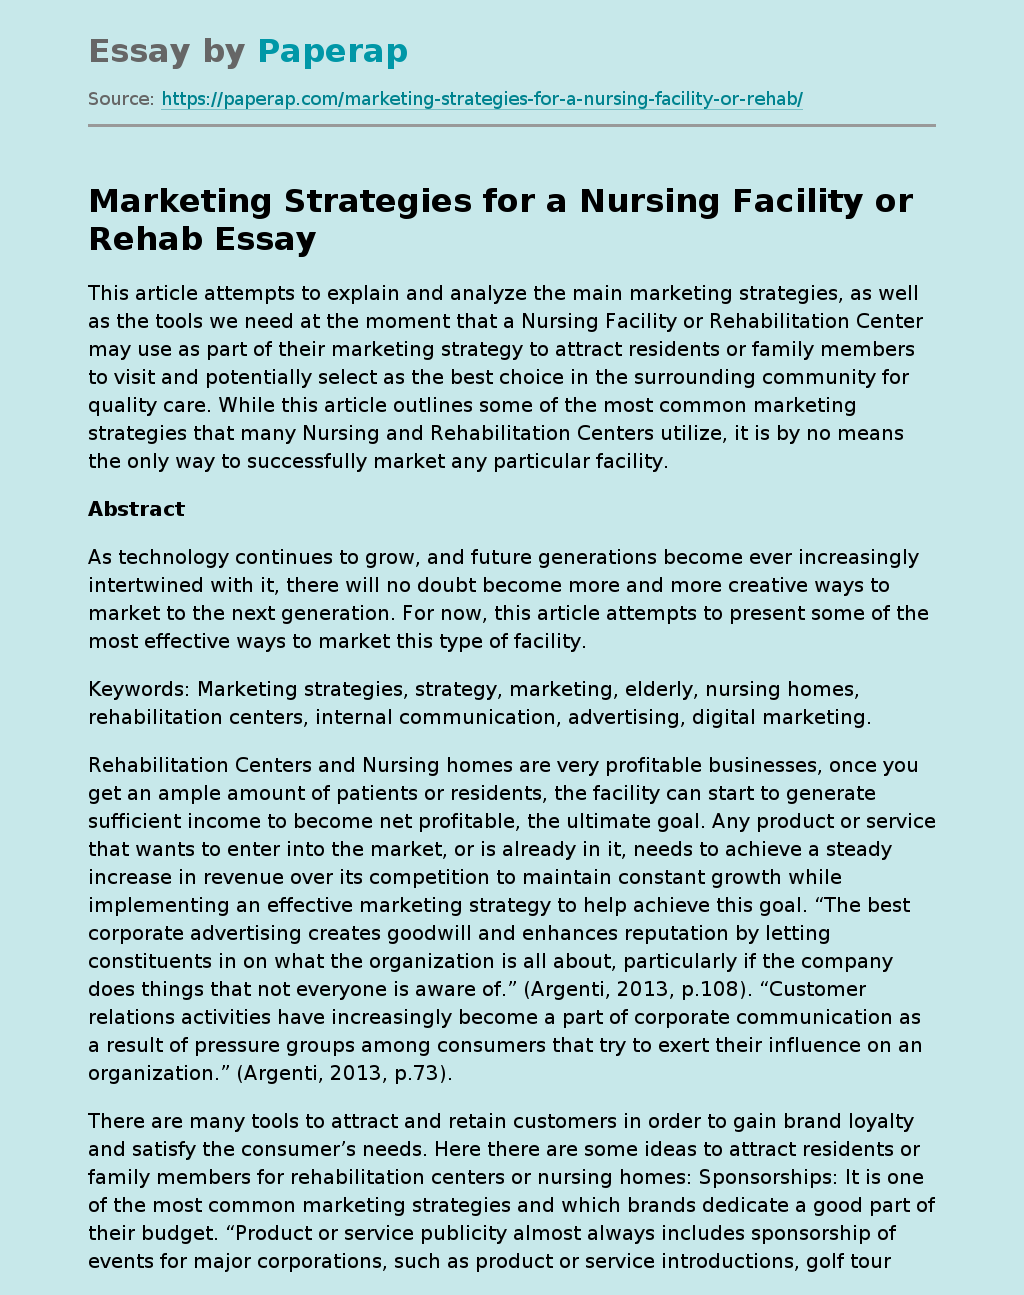 Marketing Strategies for a Nursing Facility or Rehab